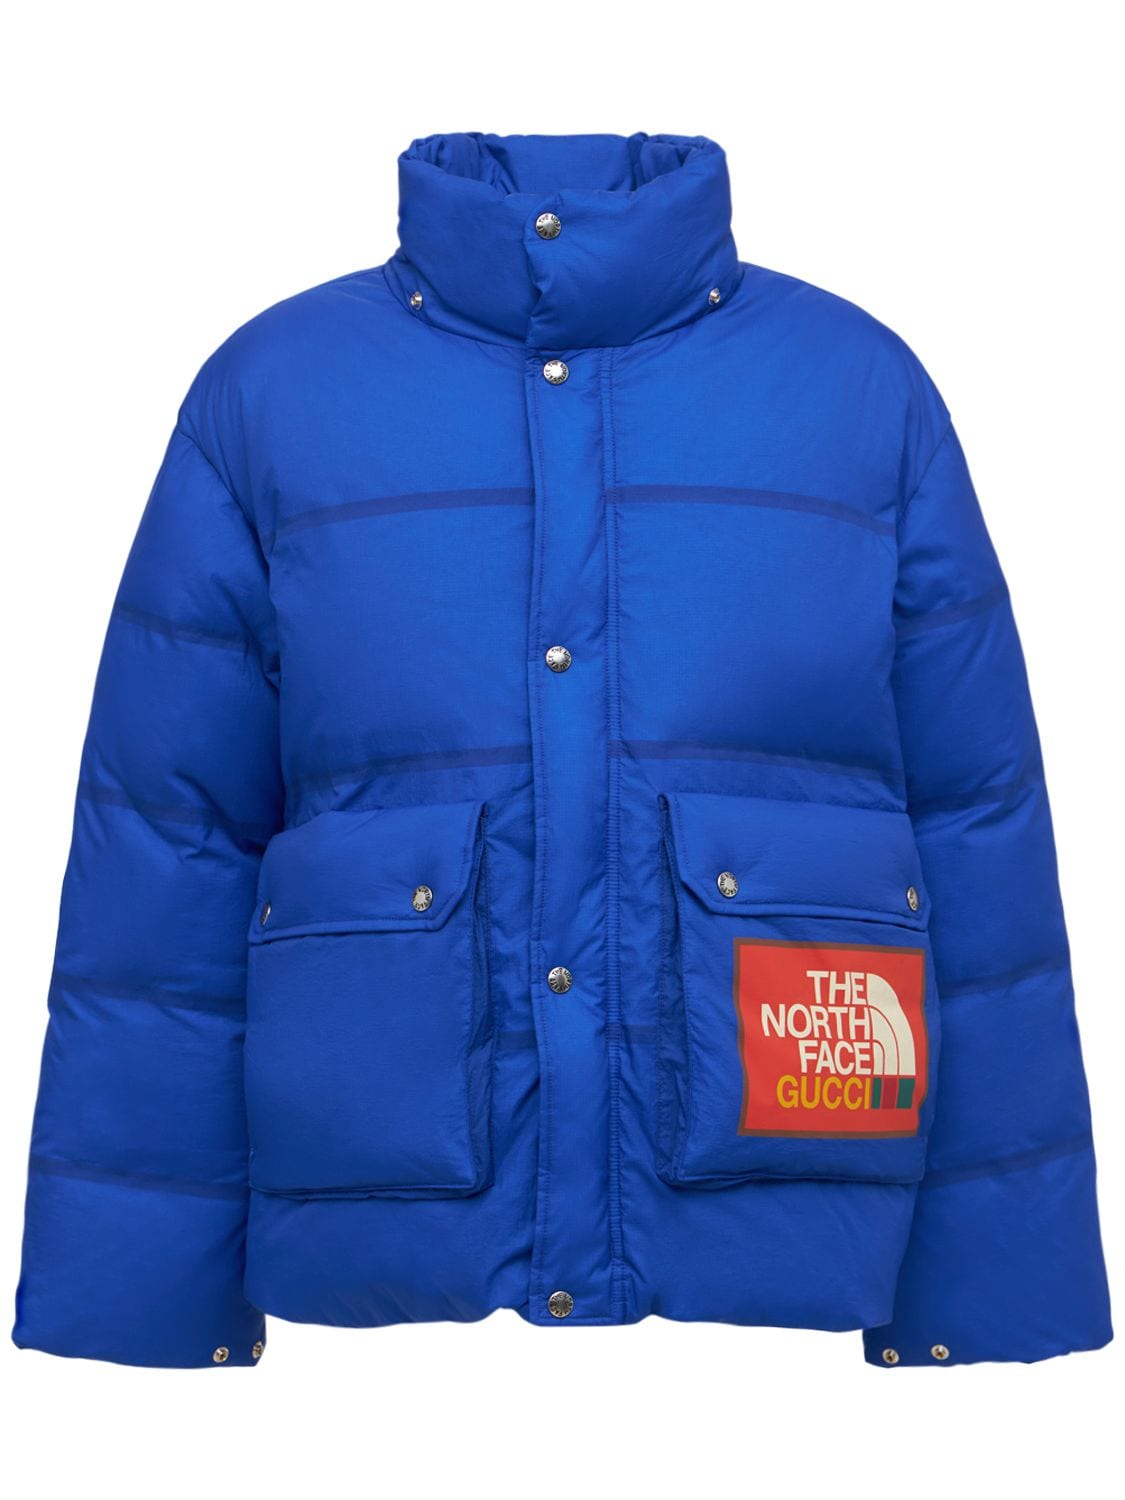 Gucci x The North Face Nylon Jacket Blue